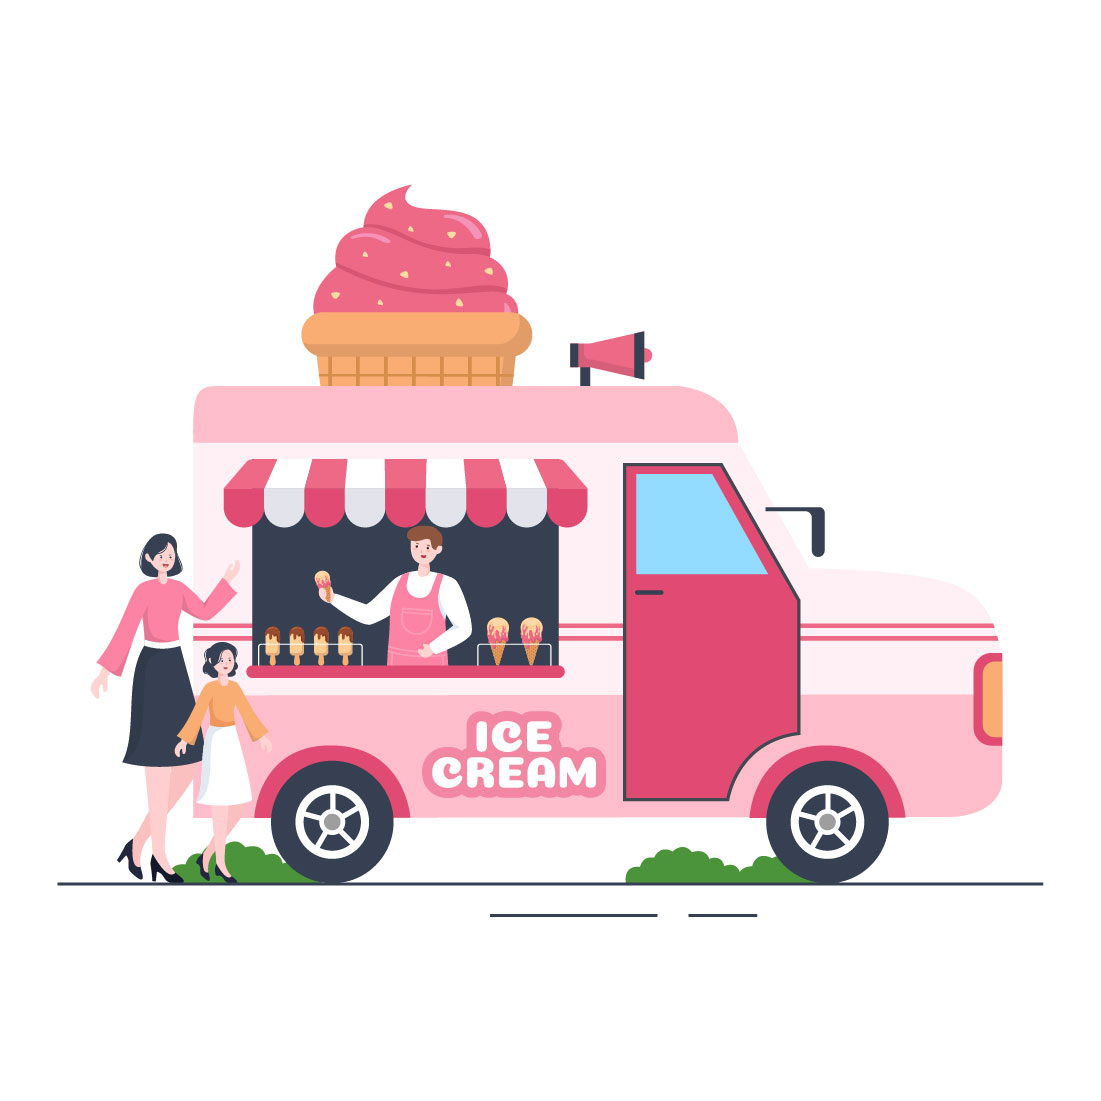 Yummy Ice Cream Illustration cover image.